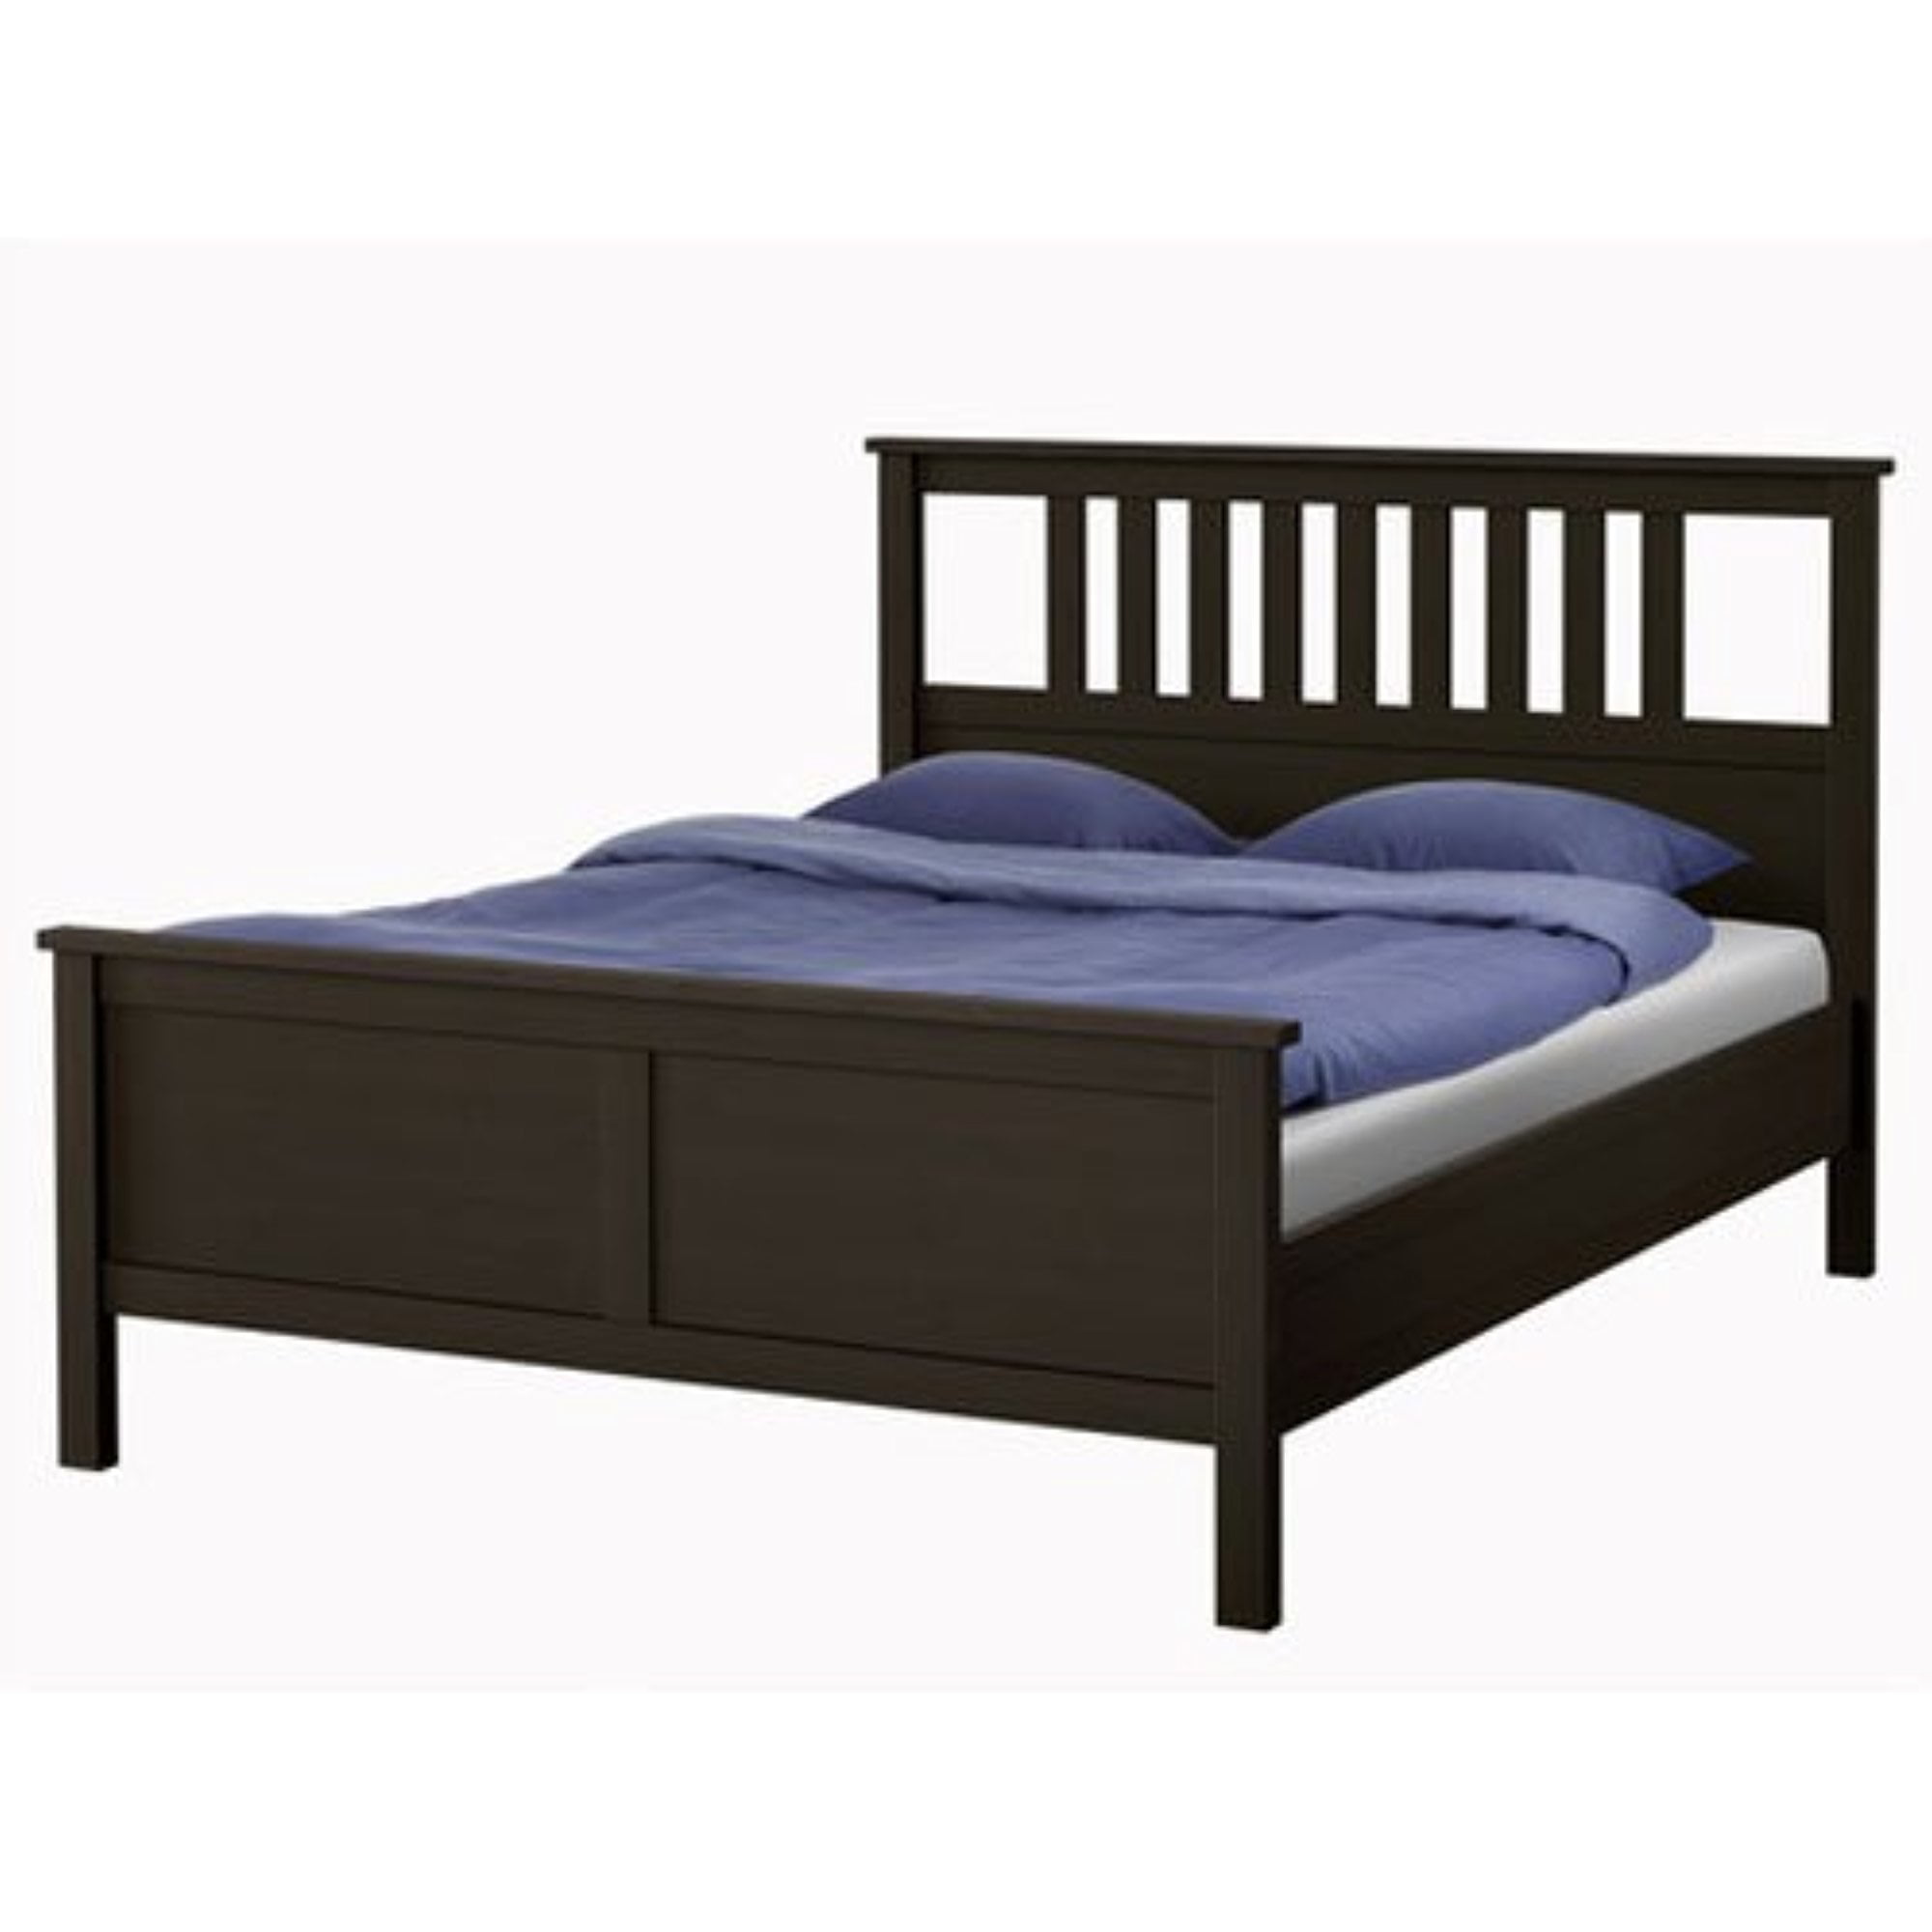 Ikea Hemnes Full Bed Frame Black-brown Wood - Walmart.com